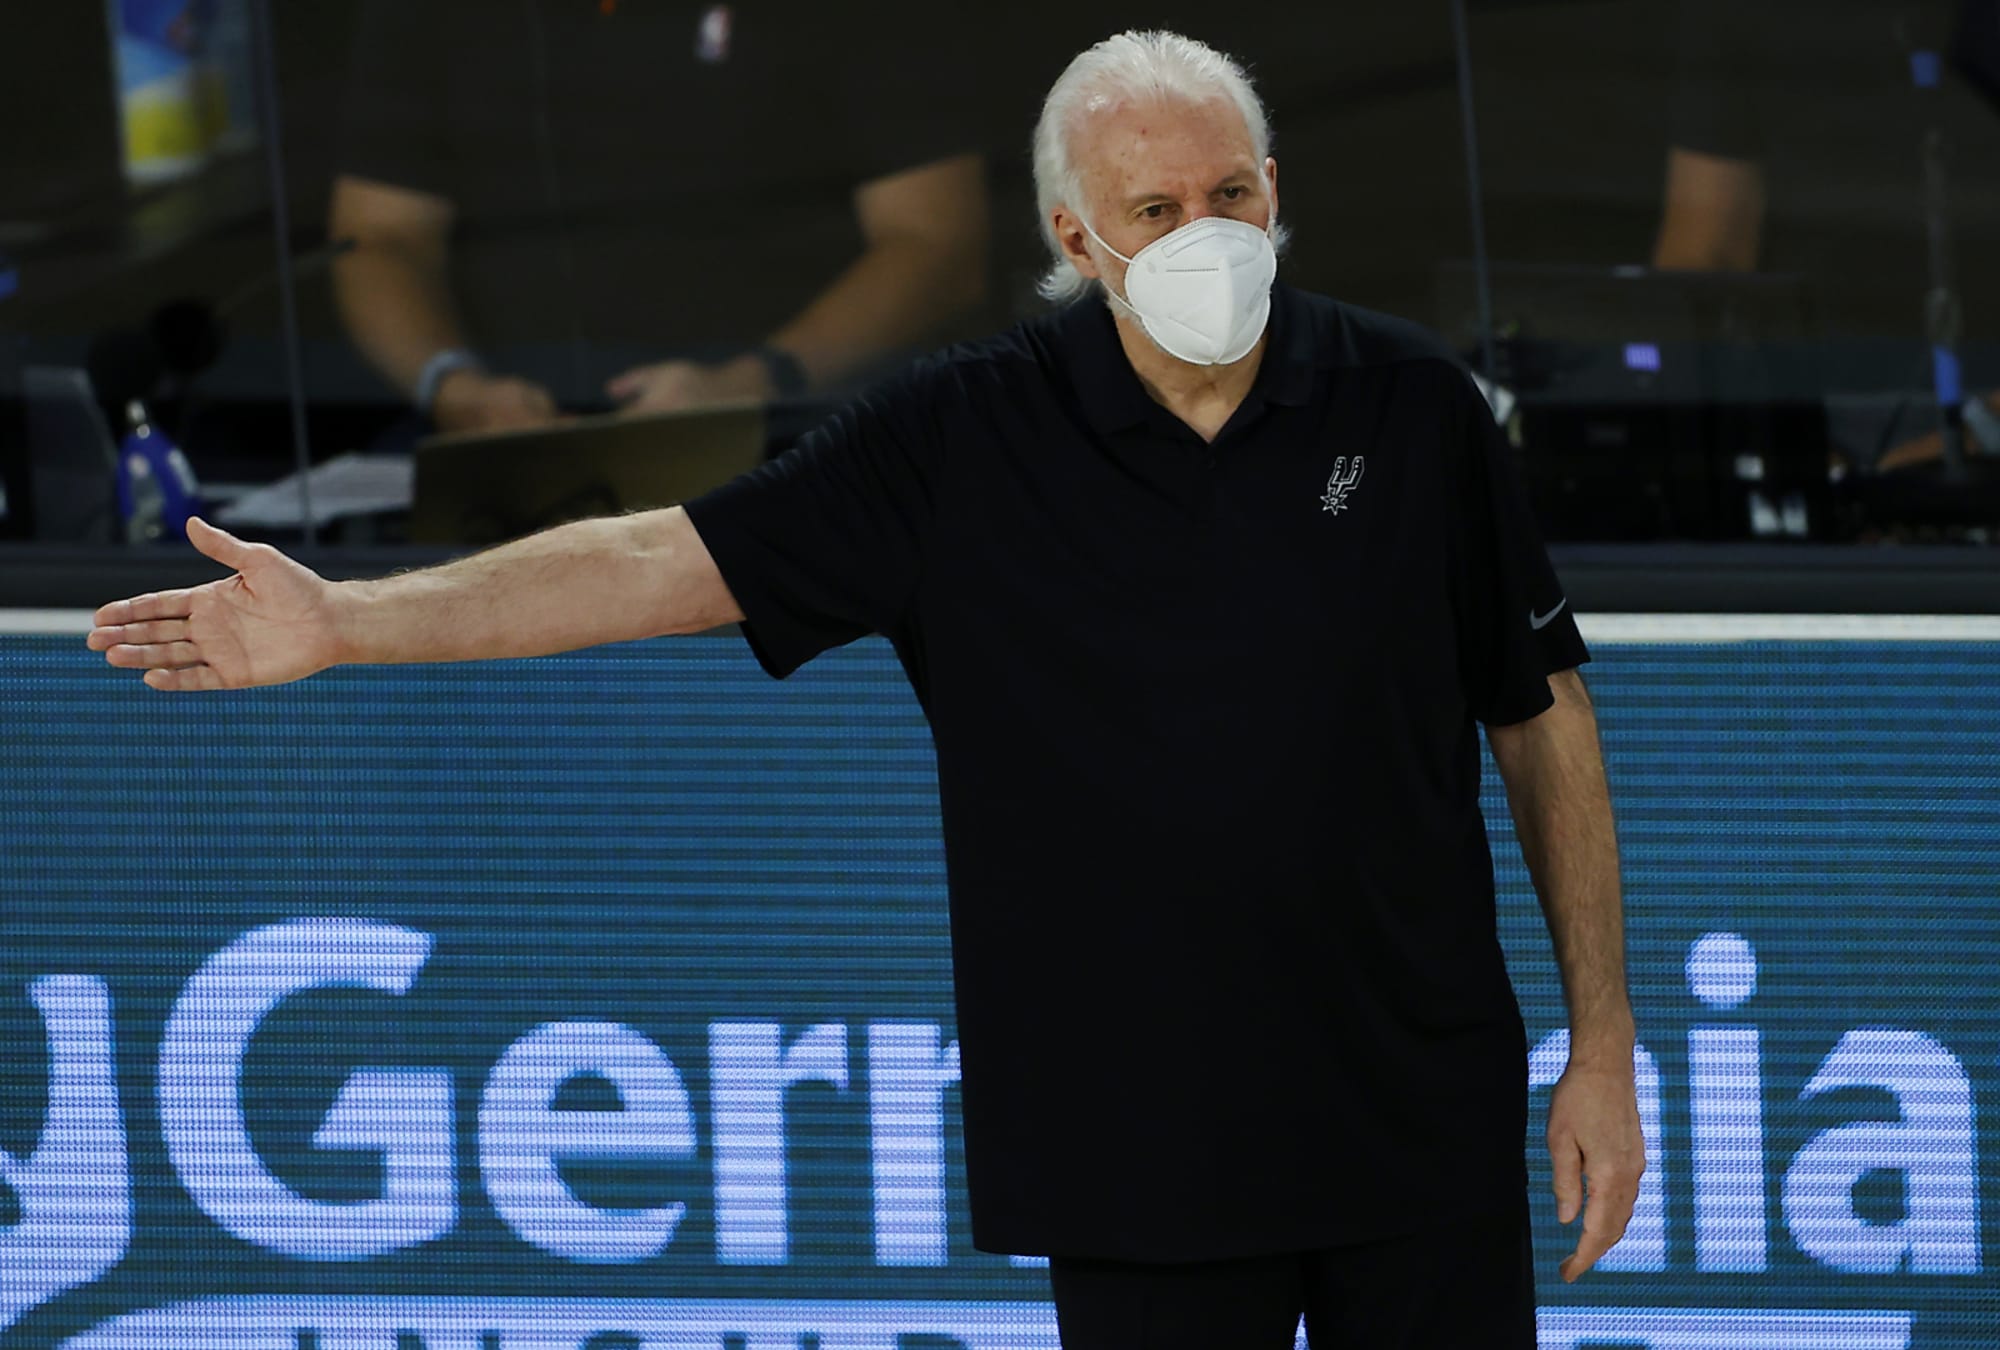 Gregg Popovich mercilessly trolls reporters over Spurs playoff streak